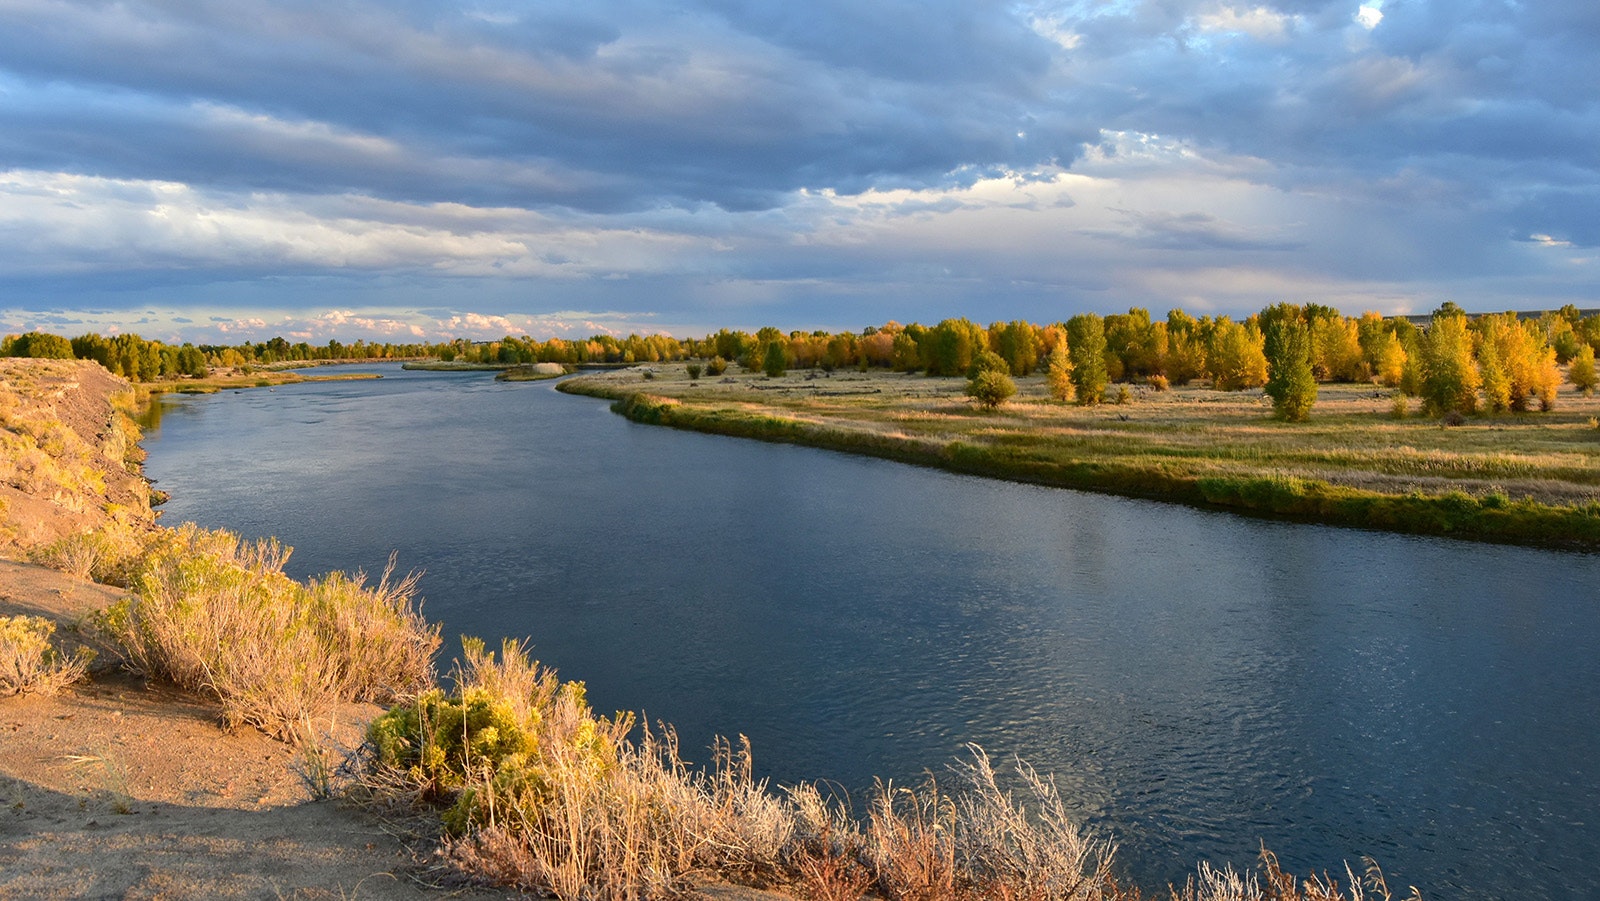 The Green River on the Seedskadee National Wildlife Refuge in southwestern Wyoming.